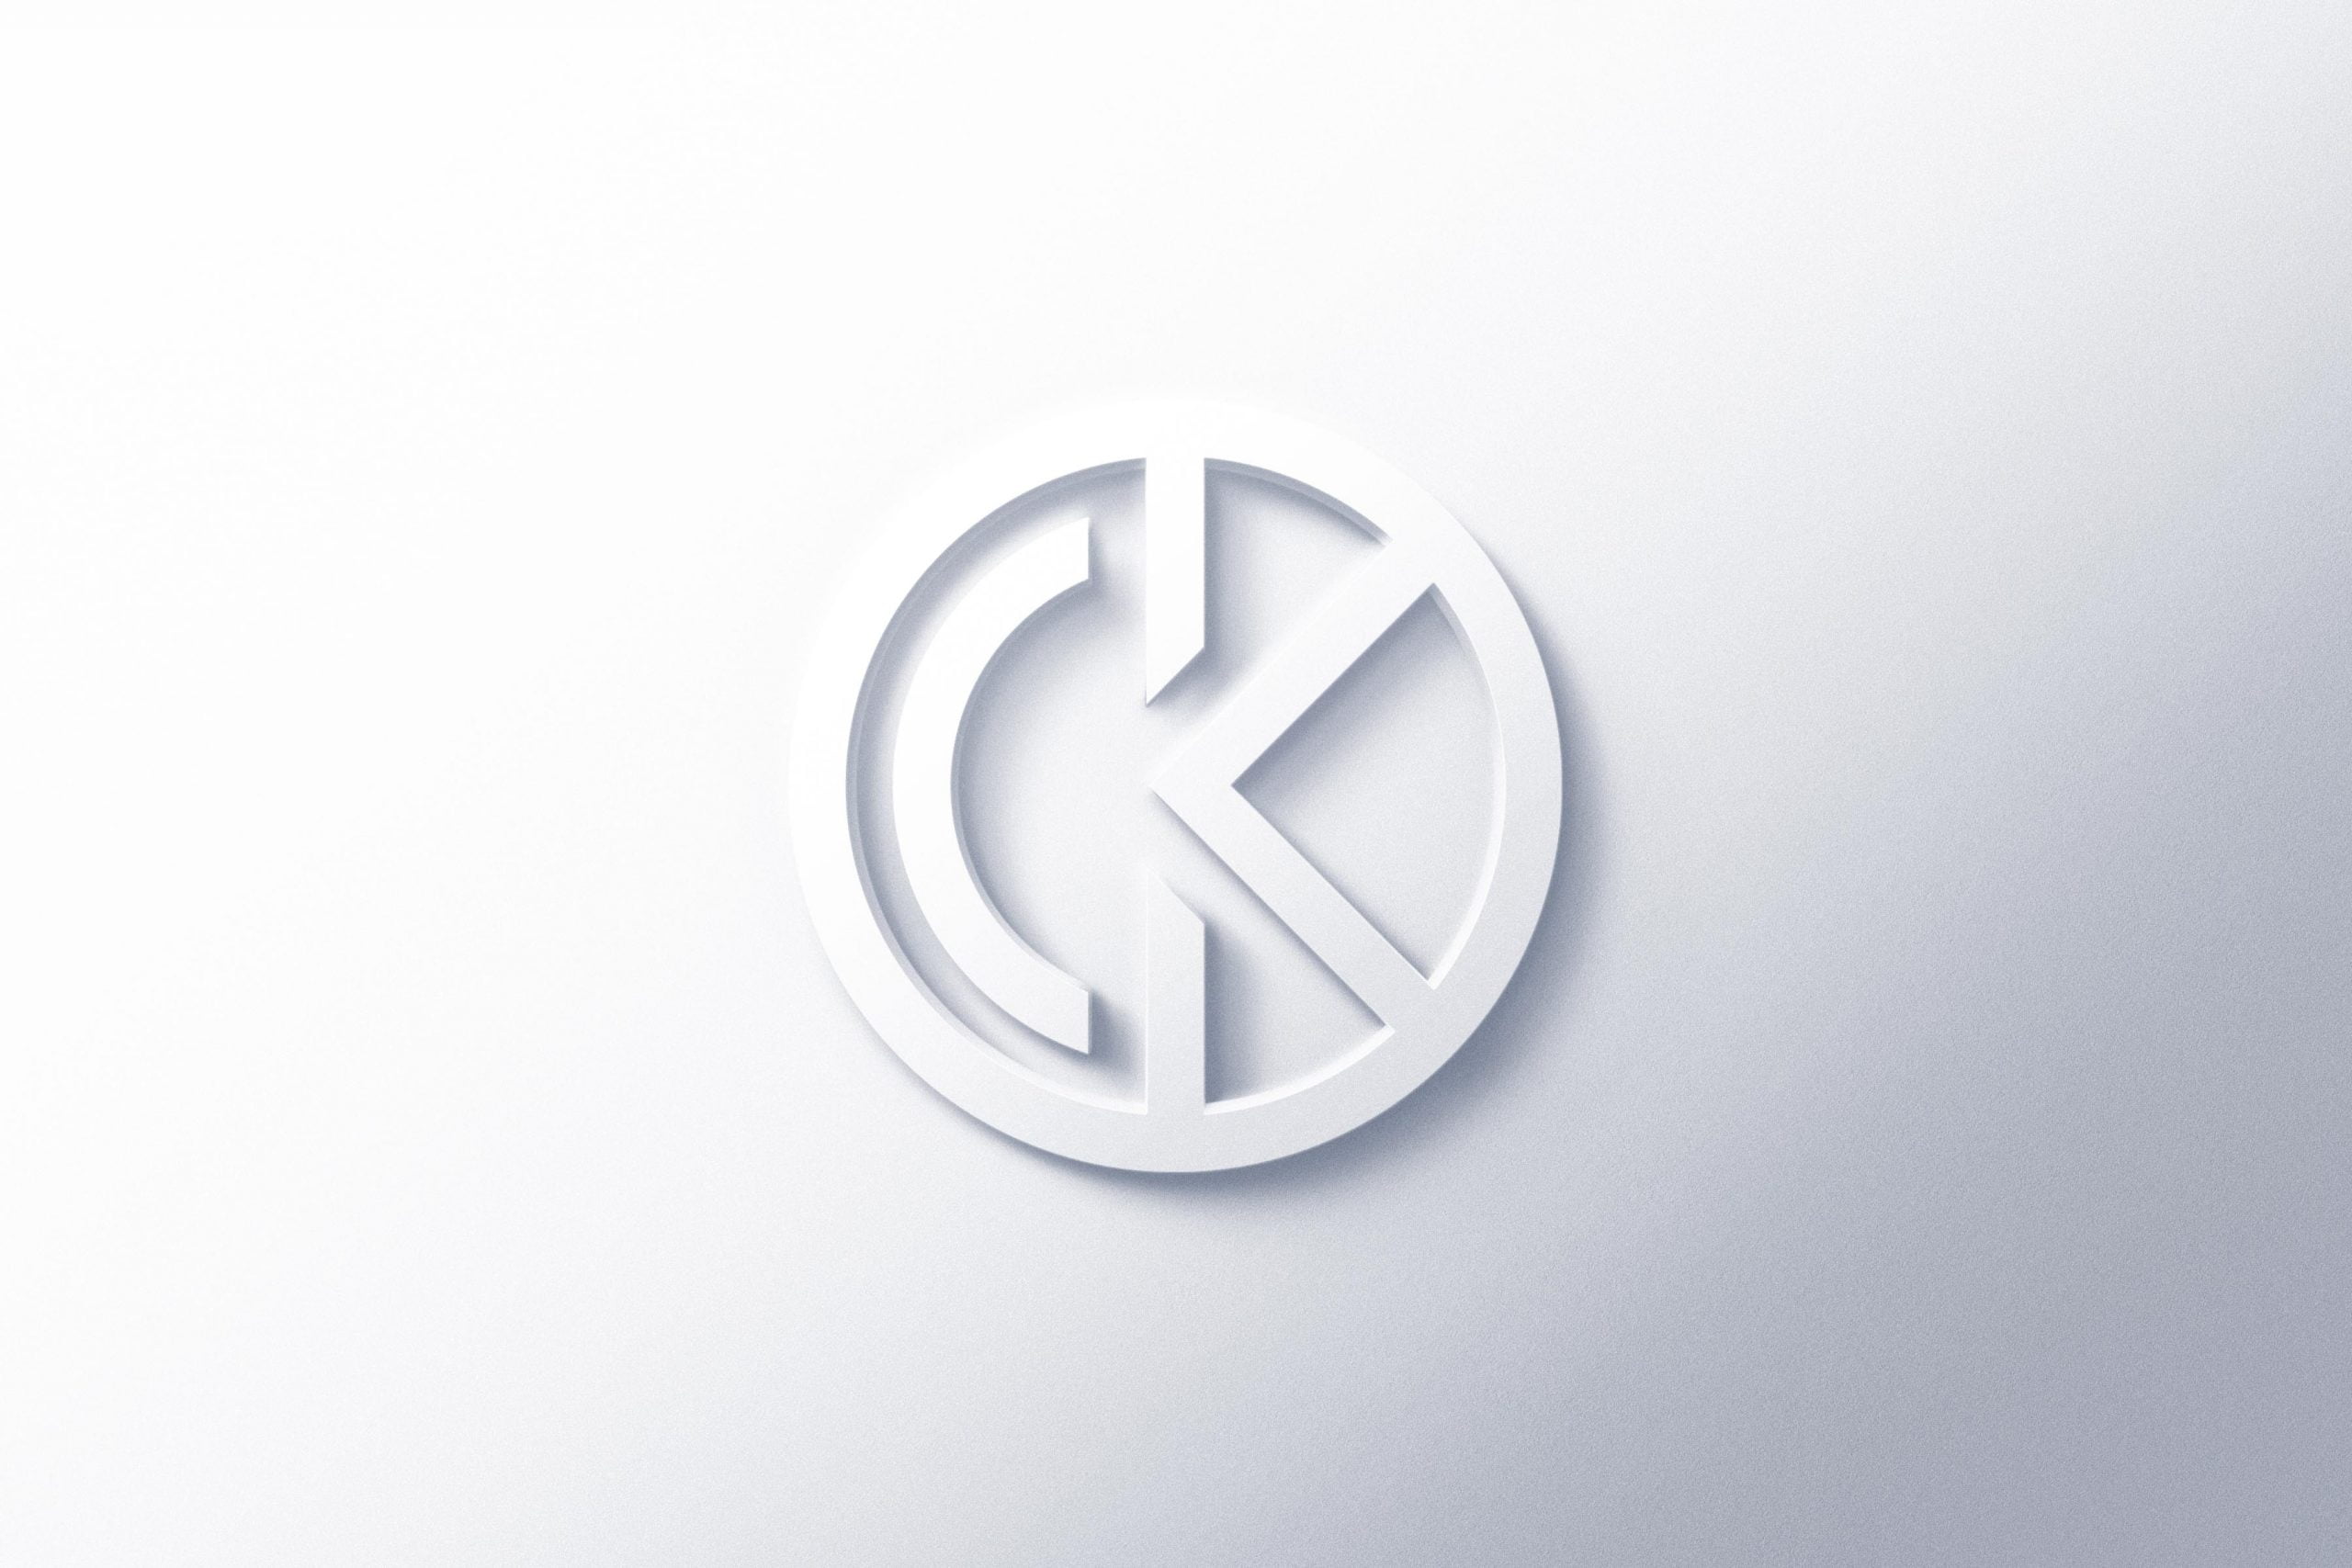 CK Modern Monogram Logo